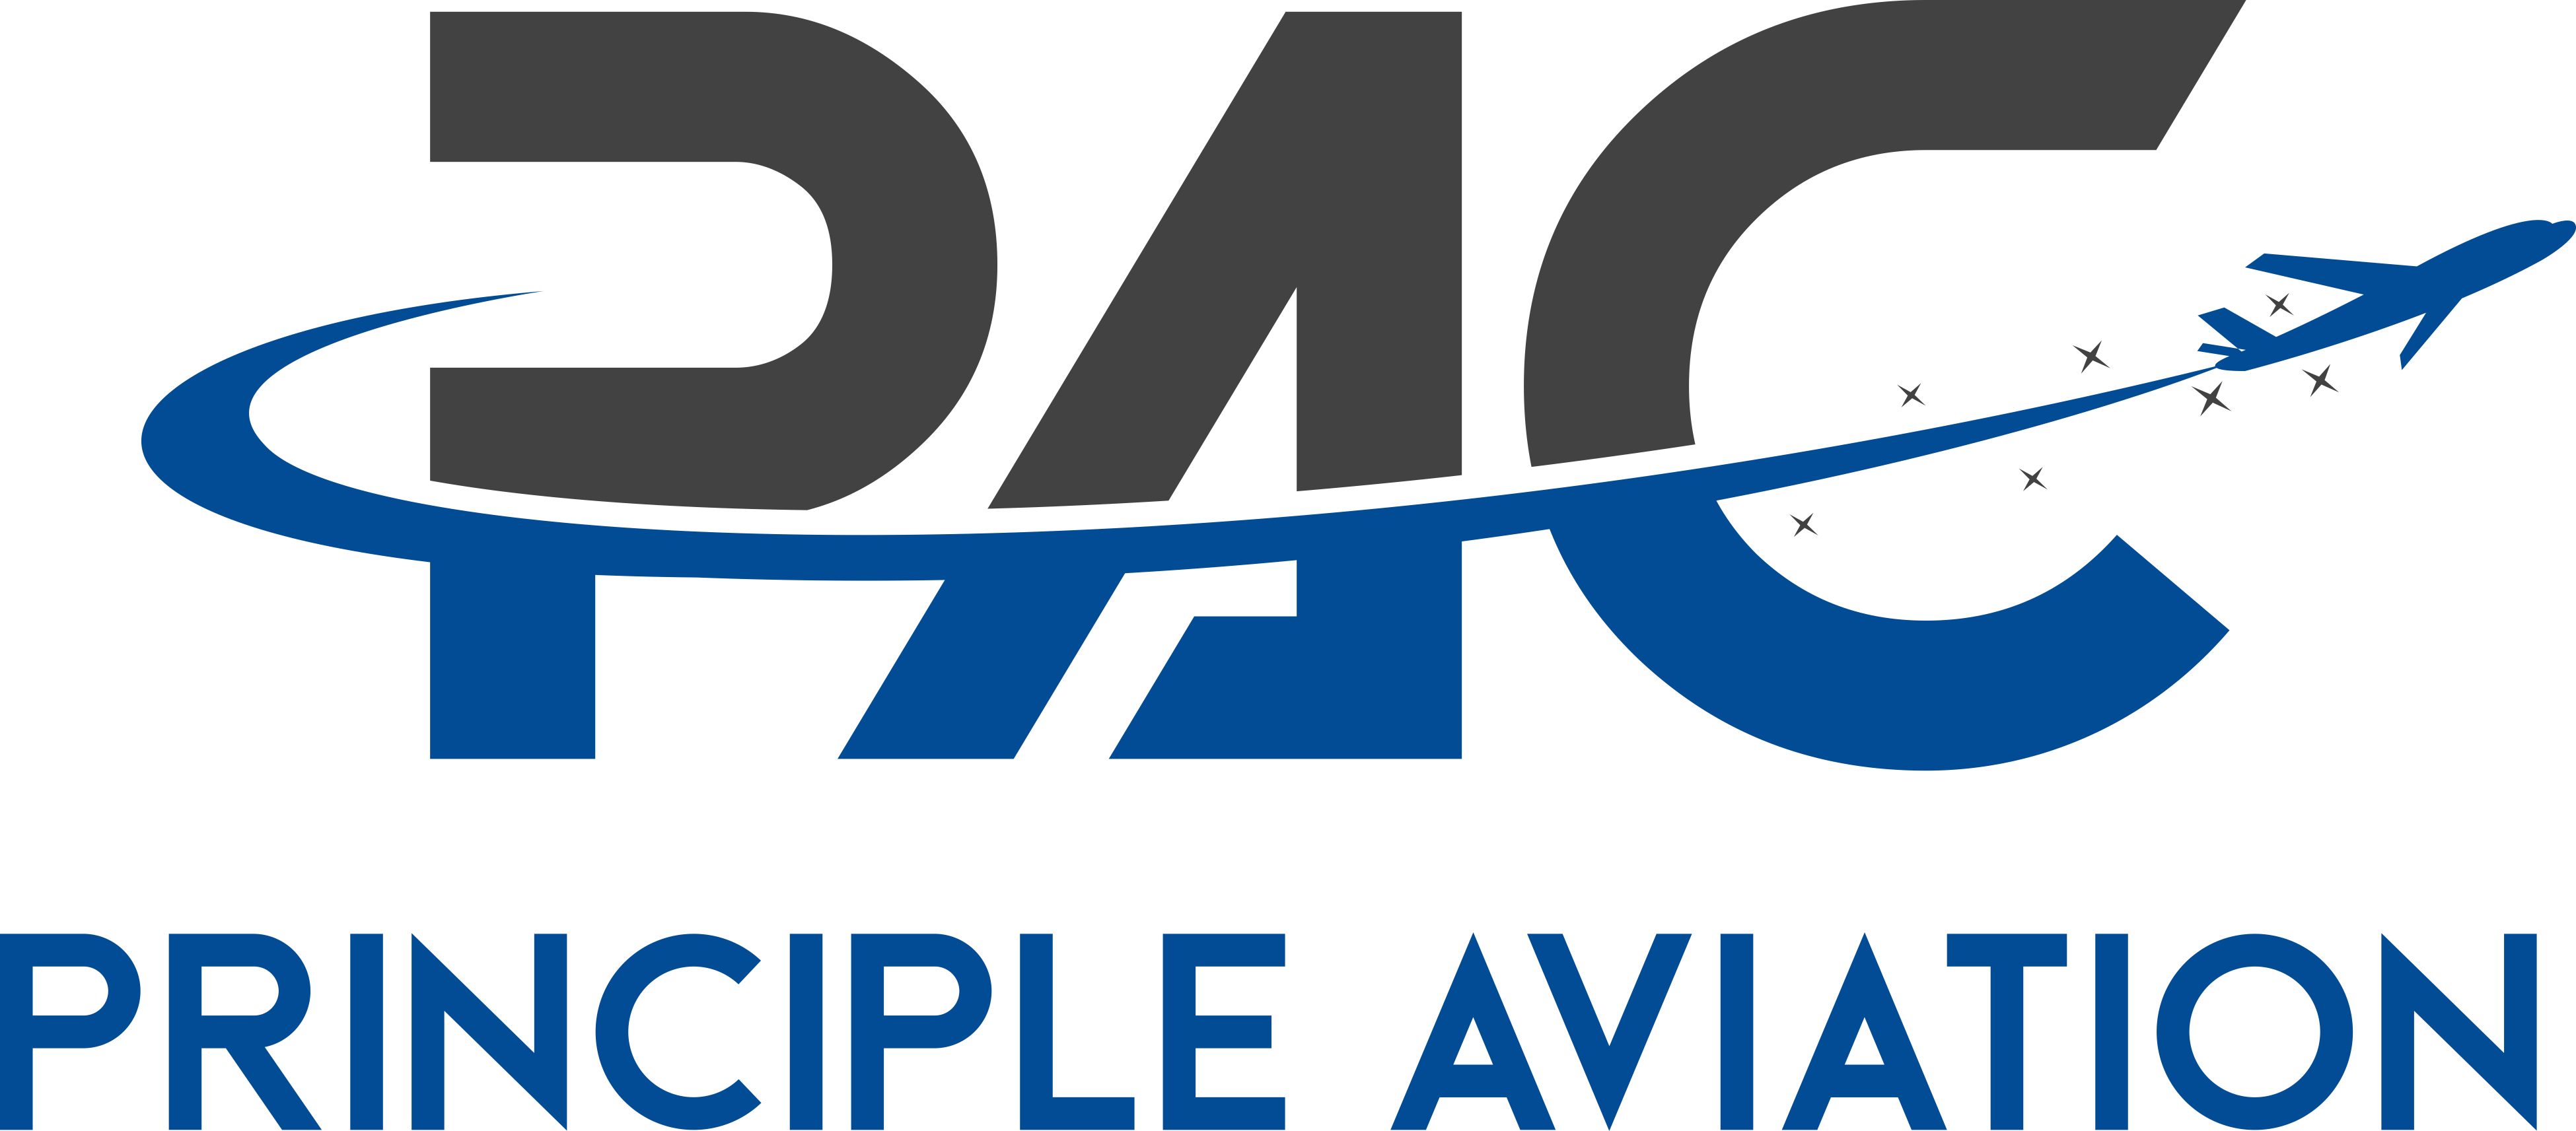 Principle Aviation Logo